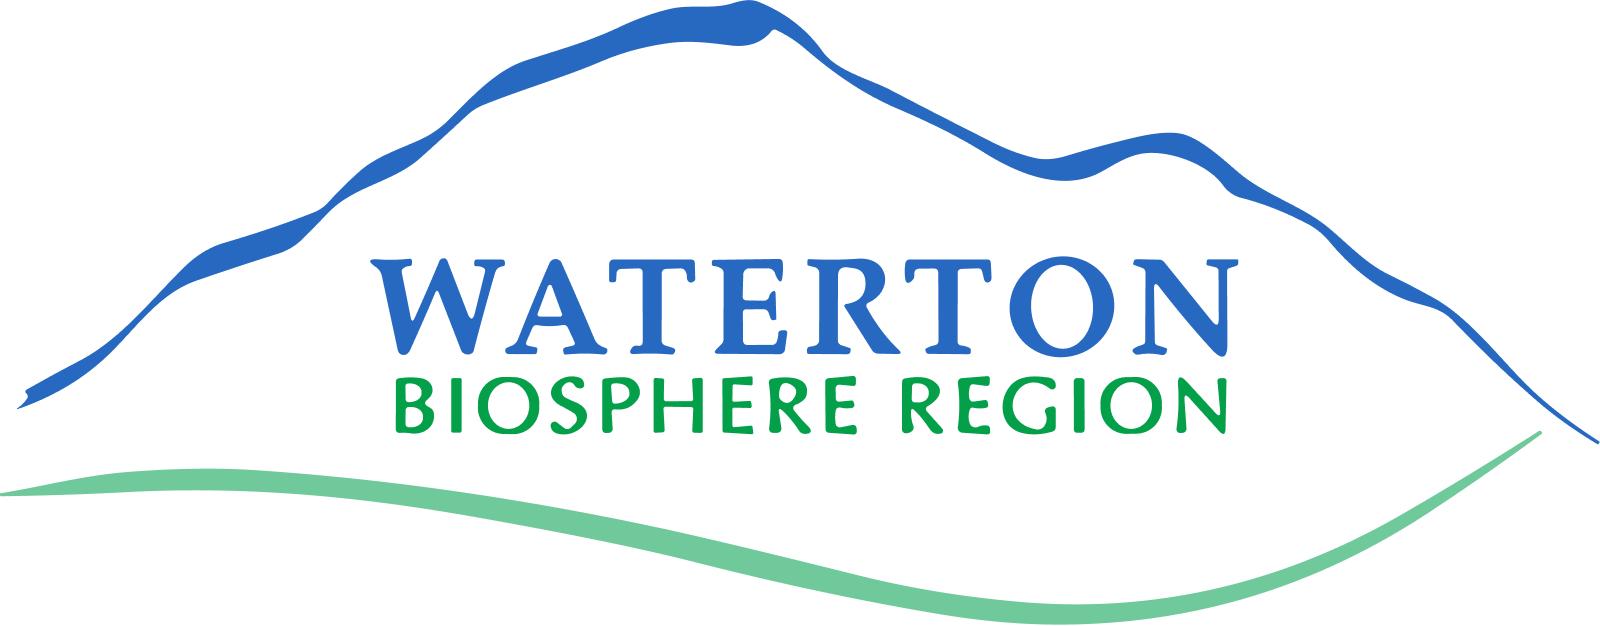 Logo for Waterton Biosphere Region on a transparent background